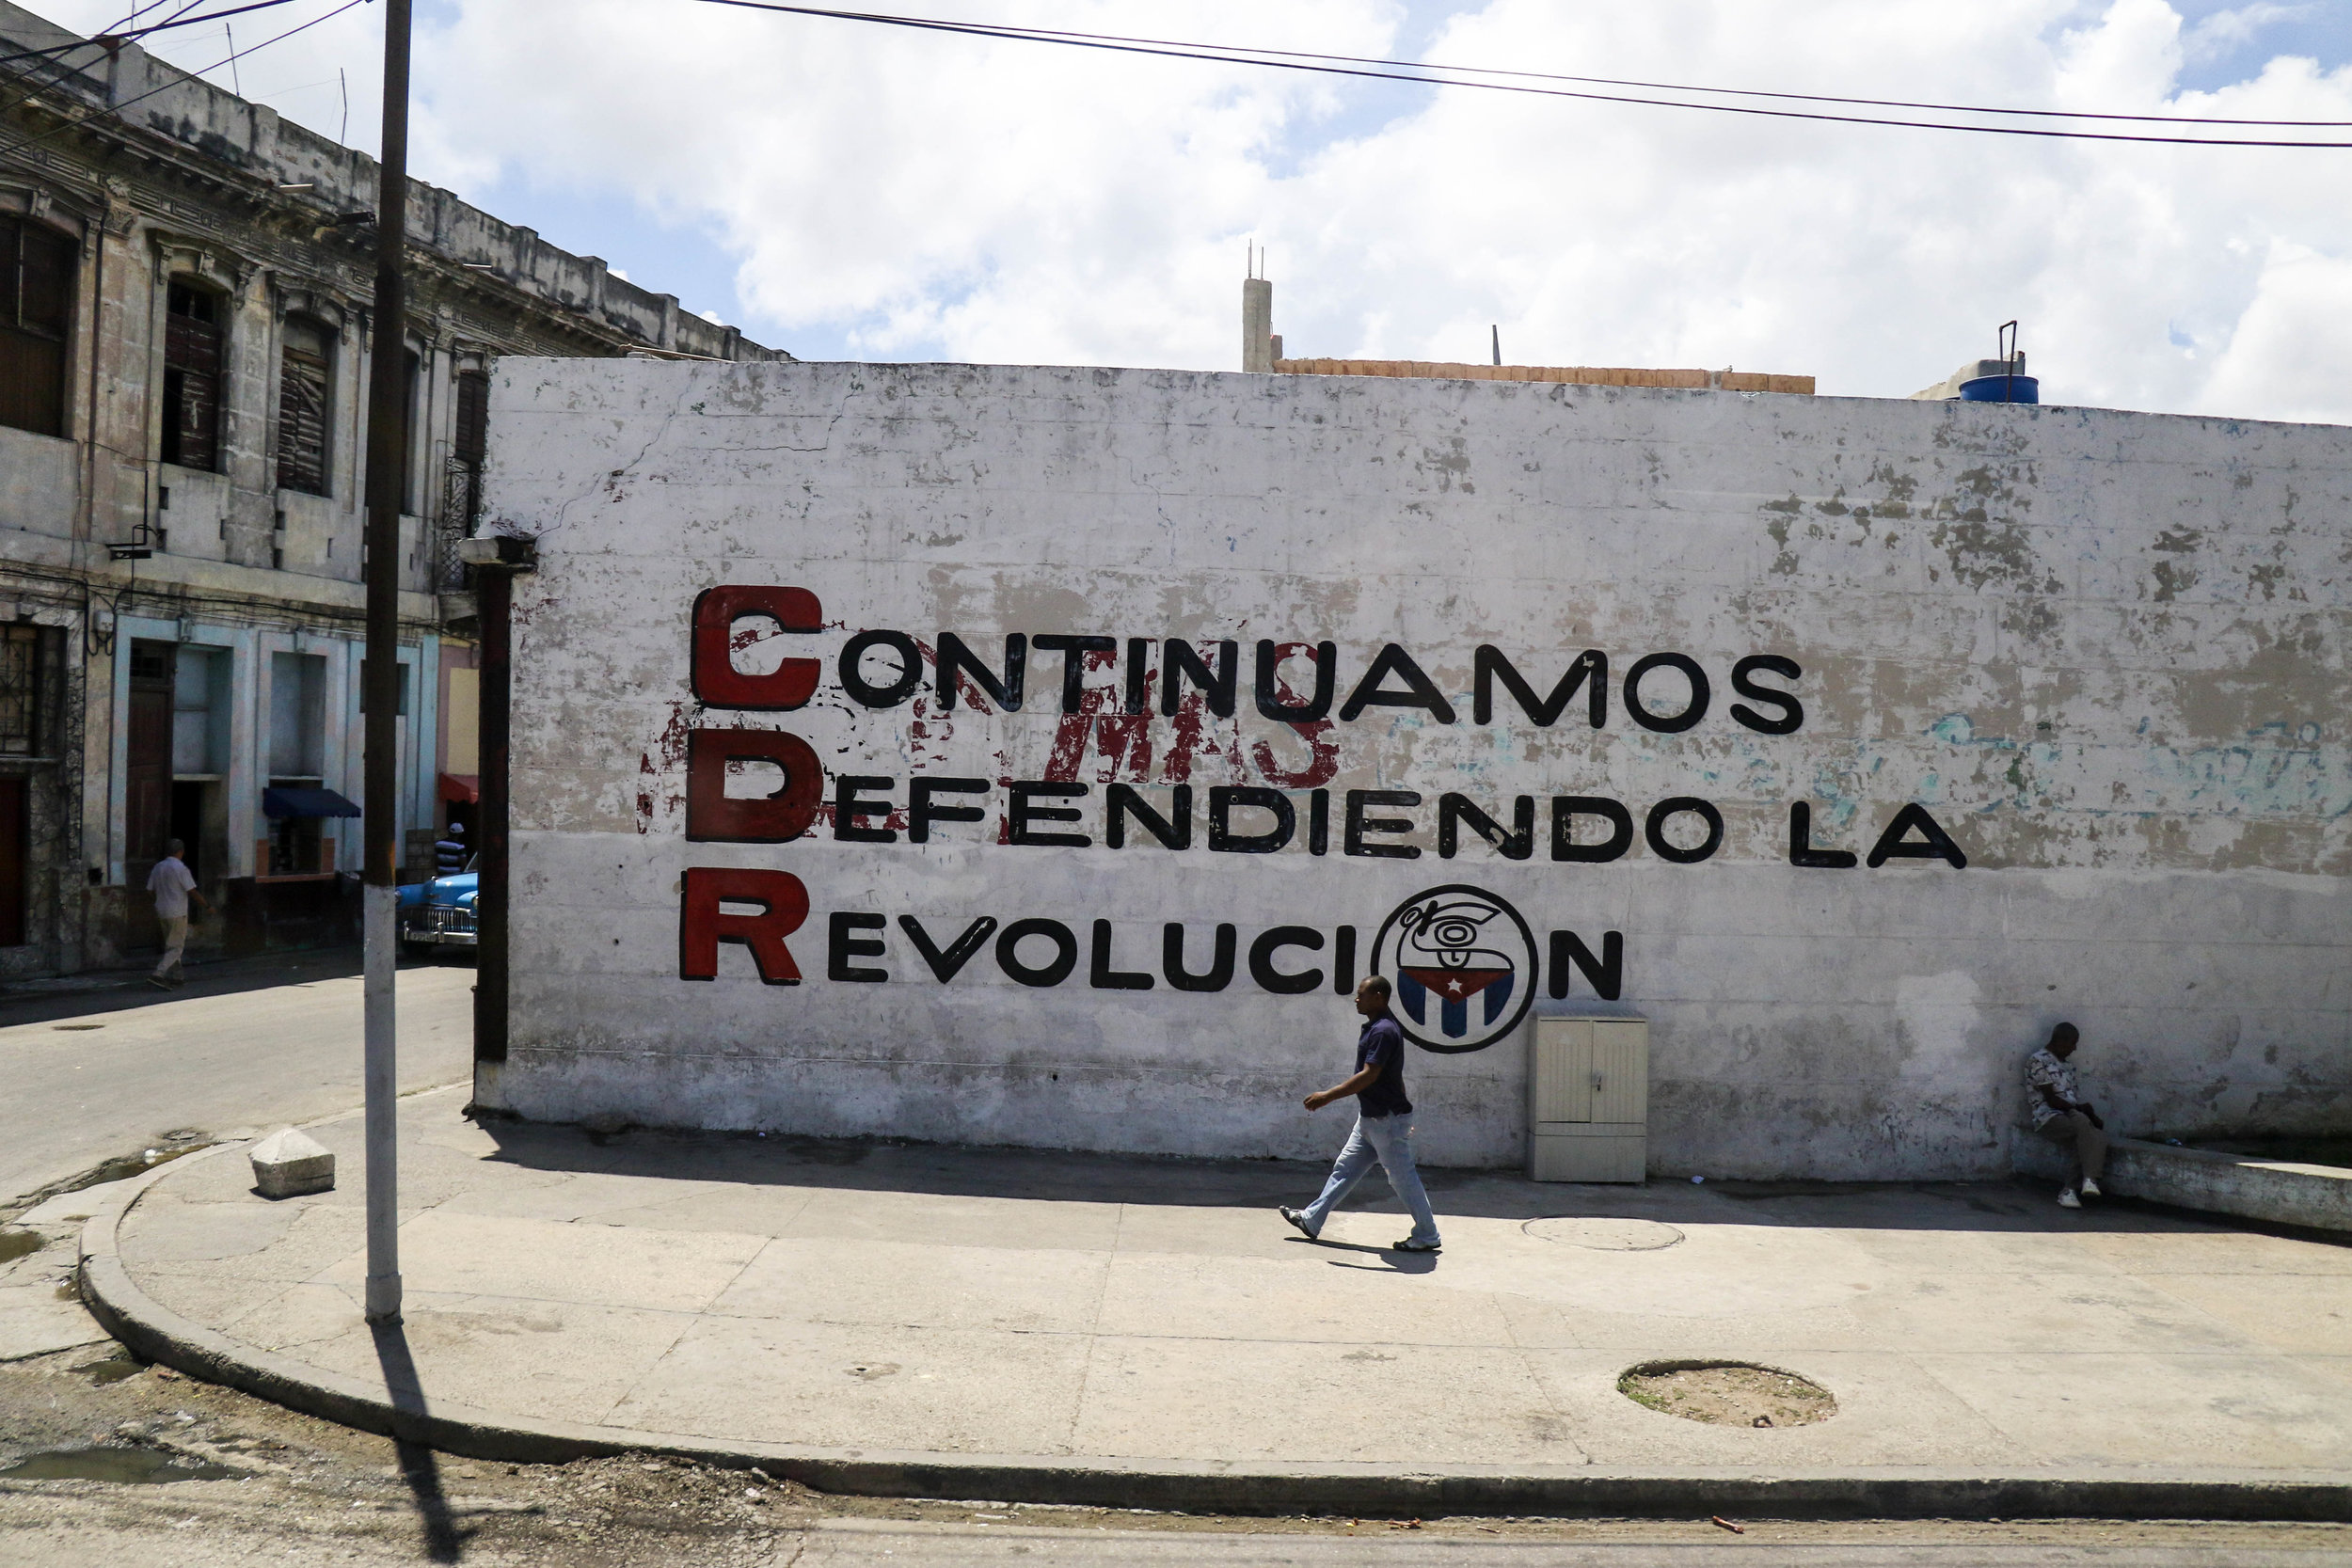 Cuba 2016 Jessica Kelly-98.jpg